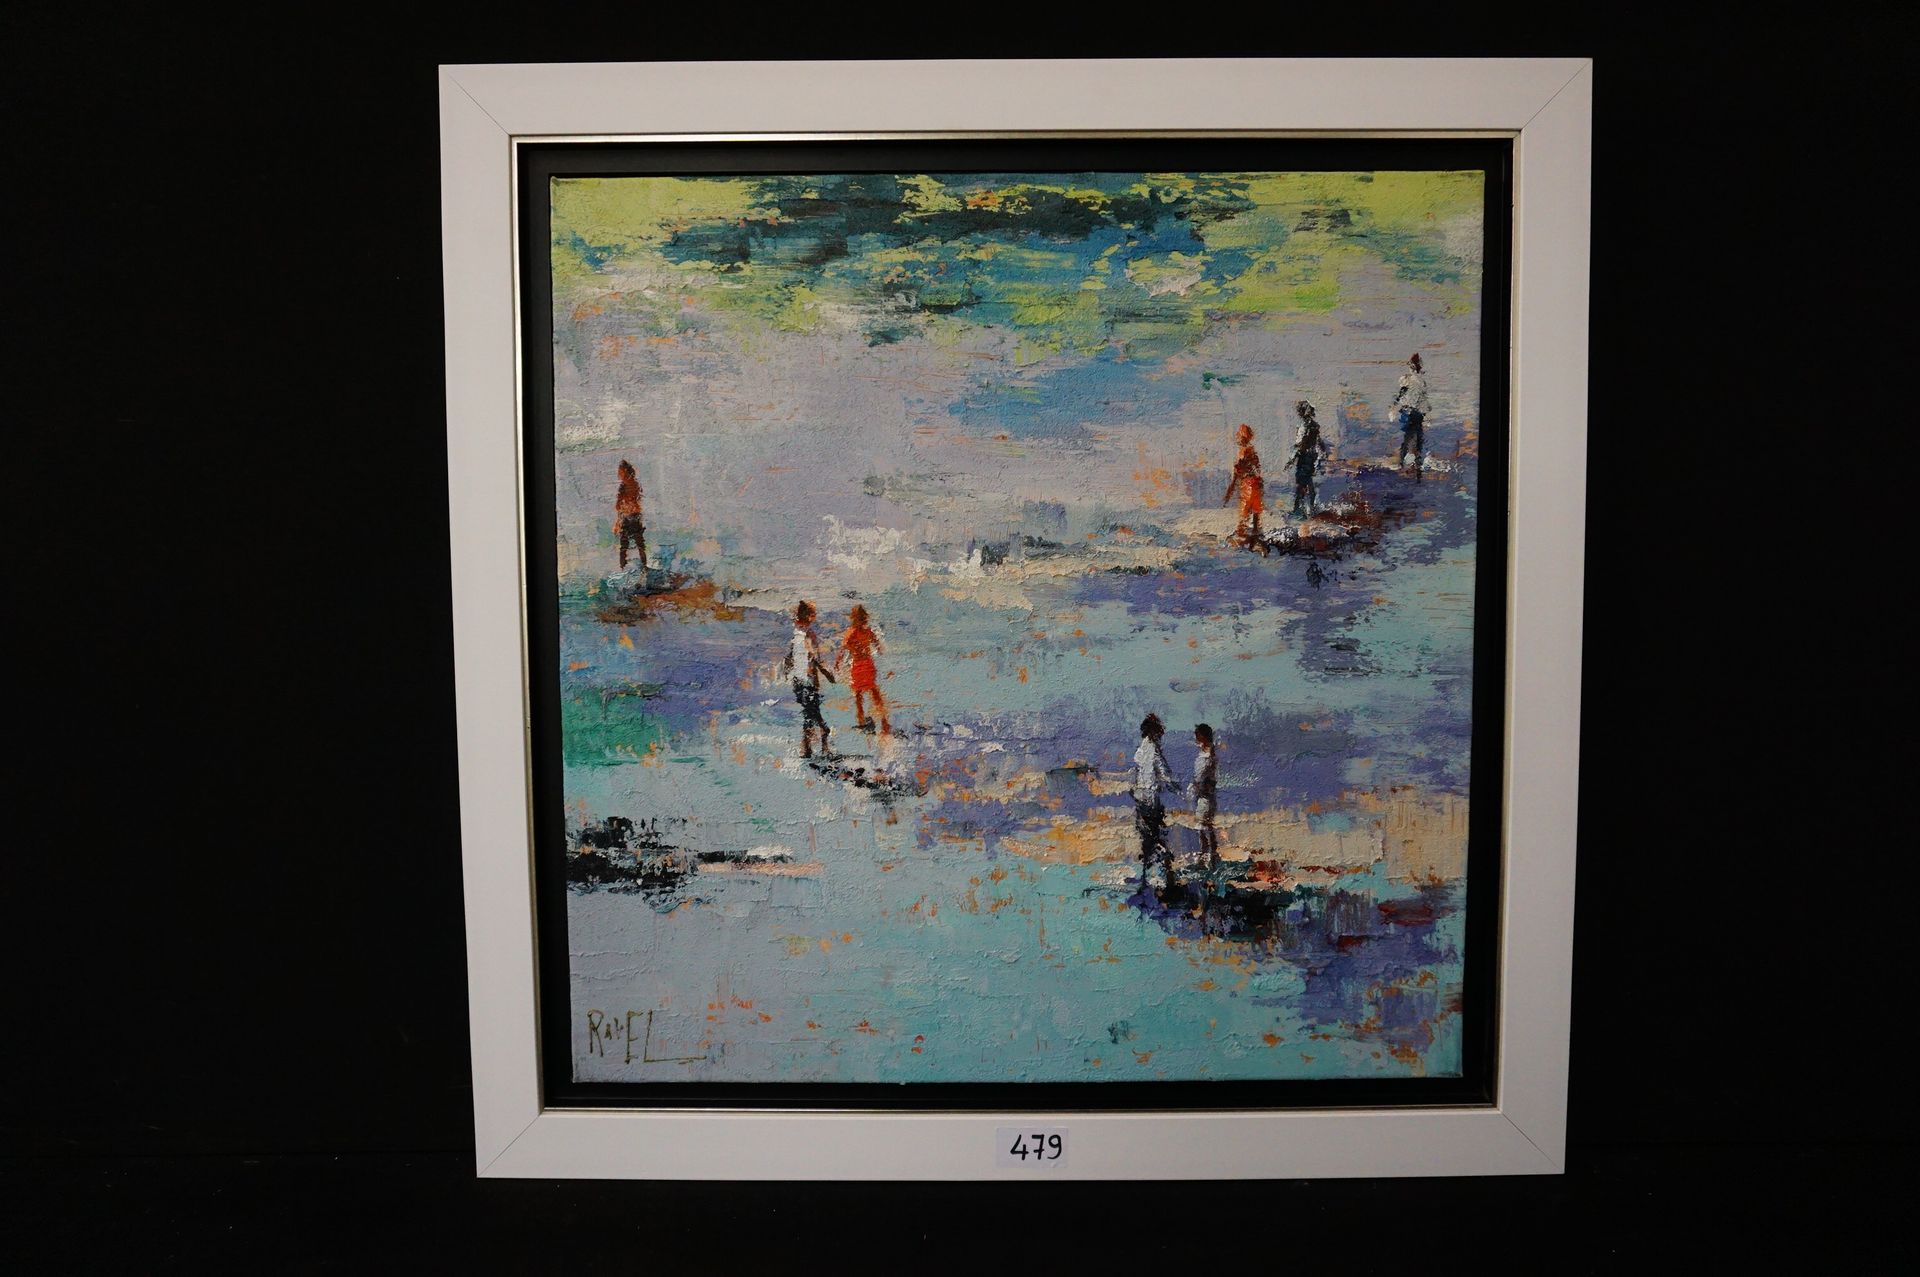 RAVEL (20ste eeuw) "星期天在沙滩上散步" - 布面油画 - 已签名 - 80 x 80 cm